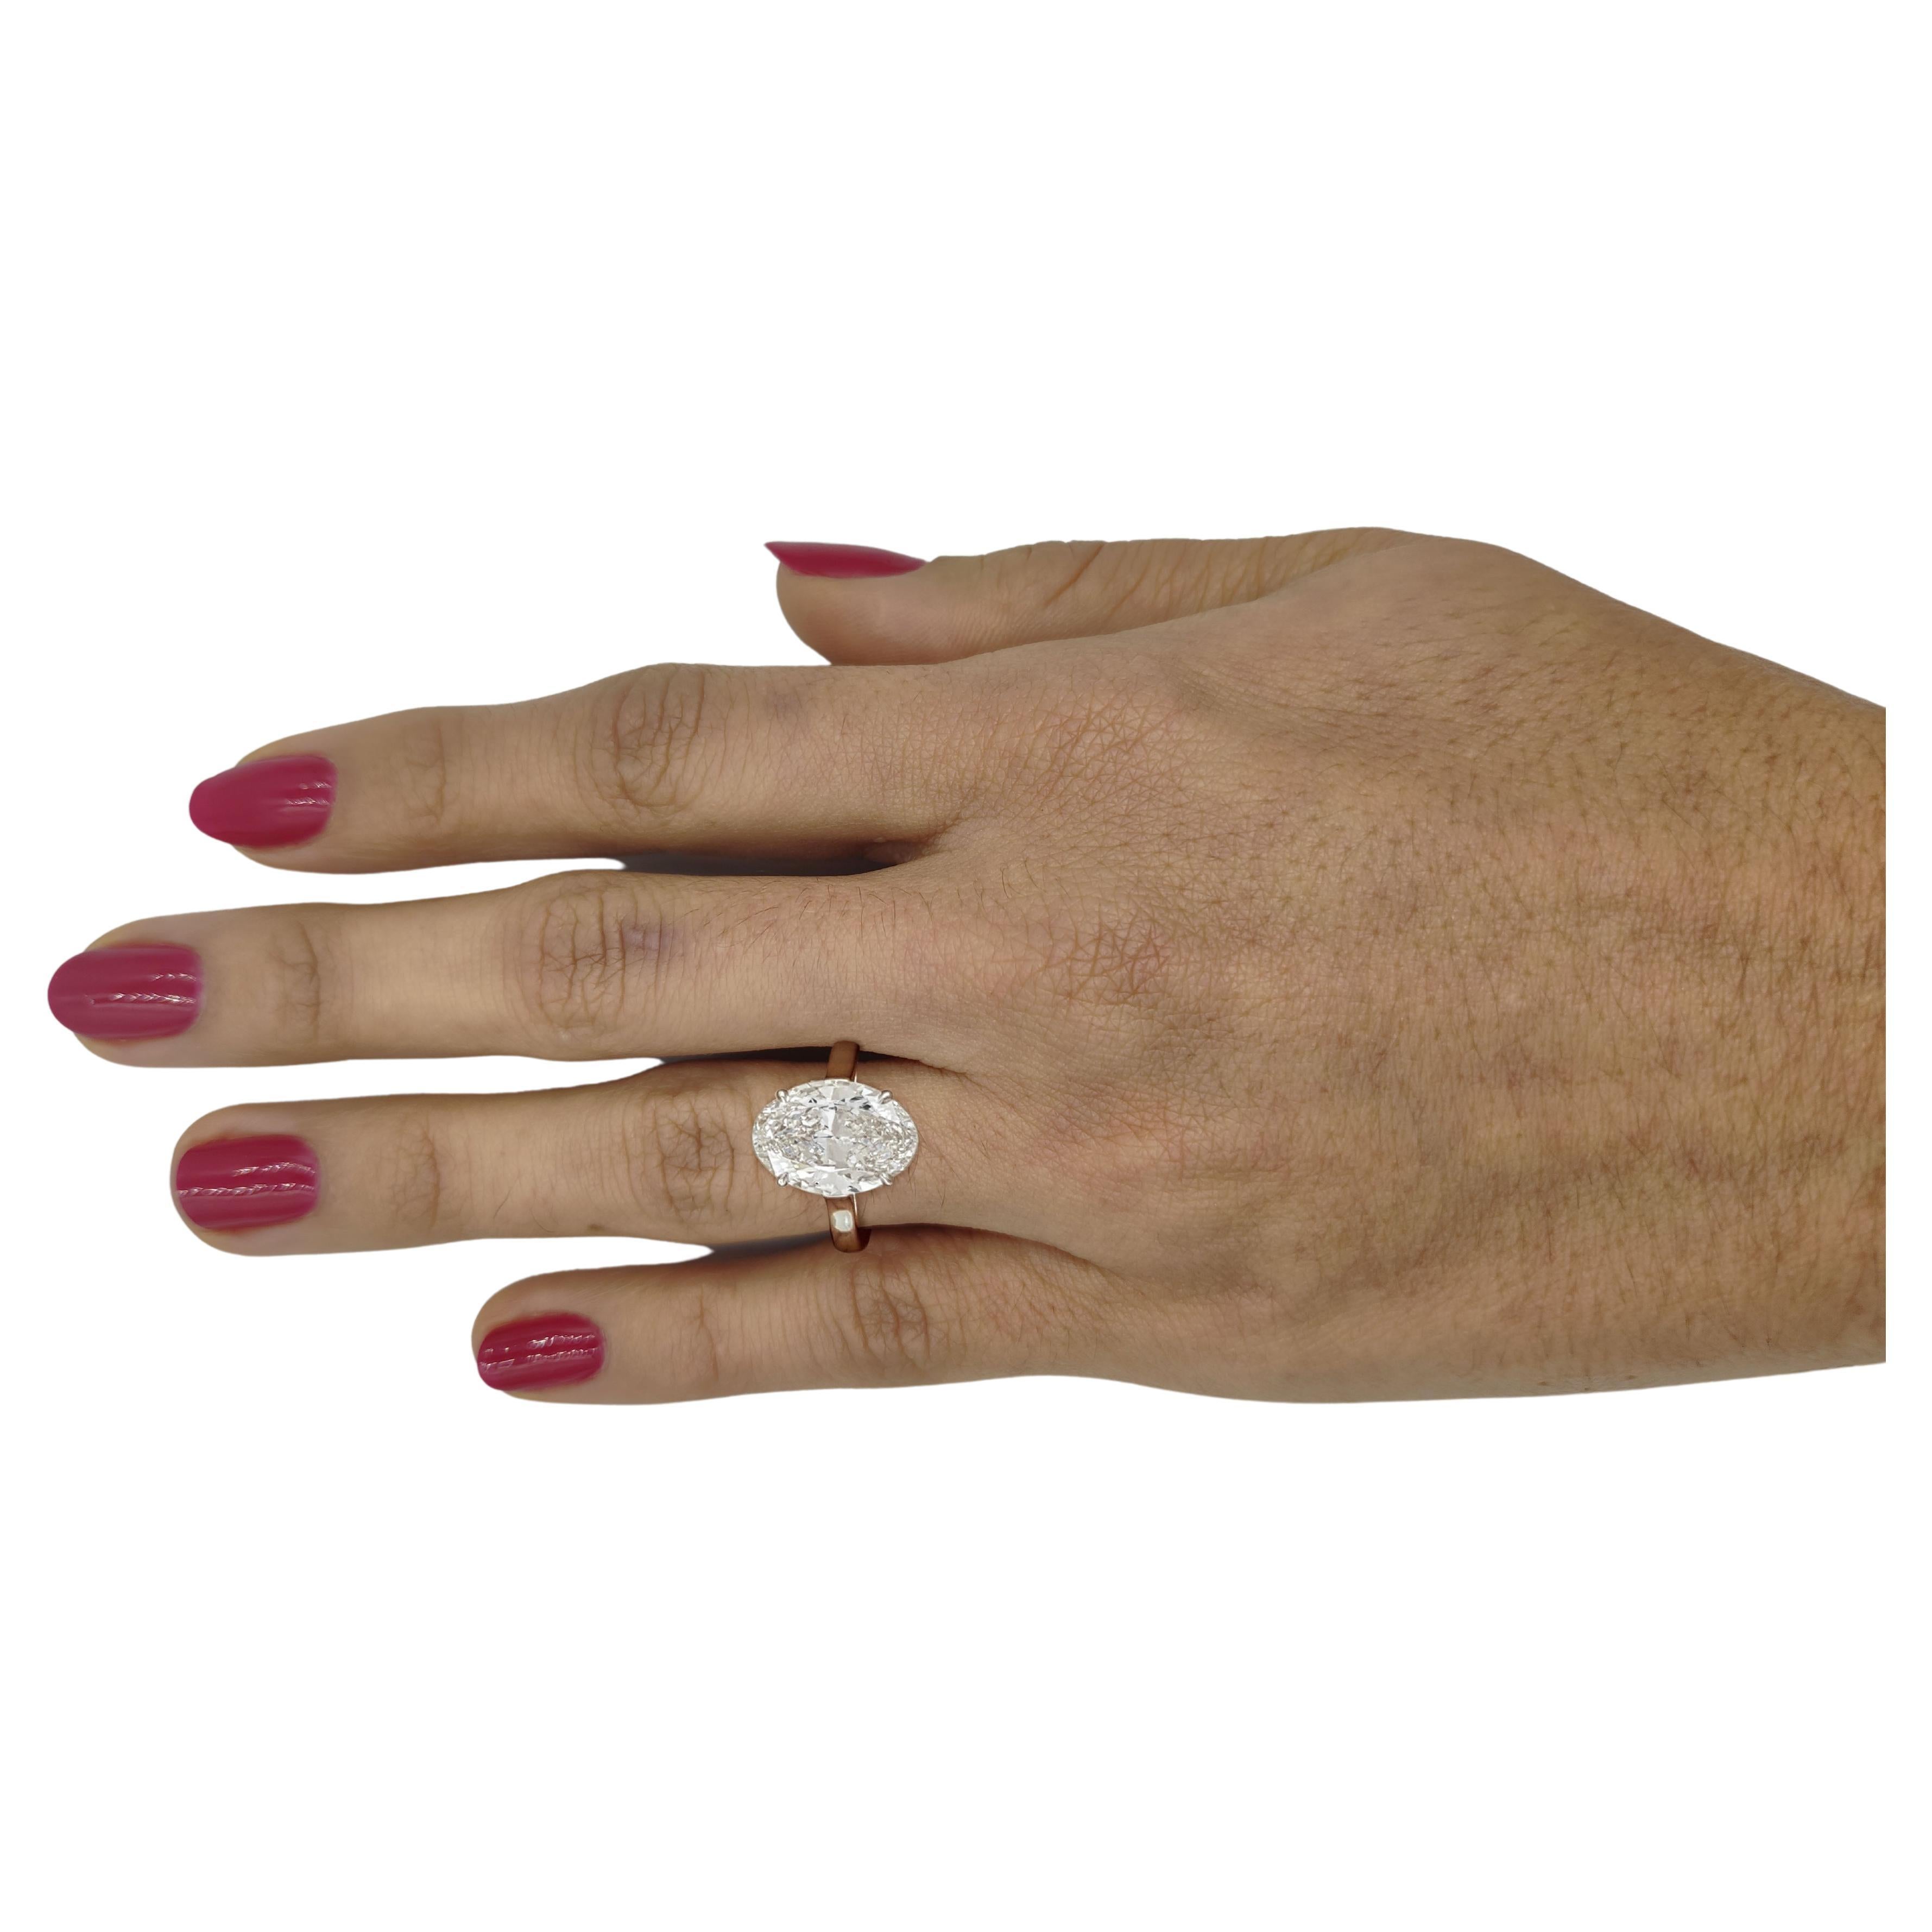 tiffany 5 carat diamond ring price